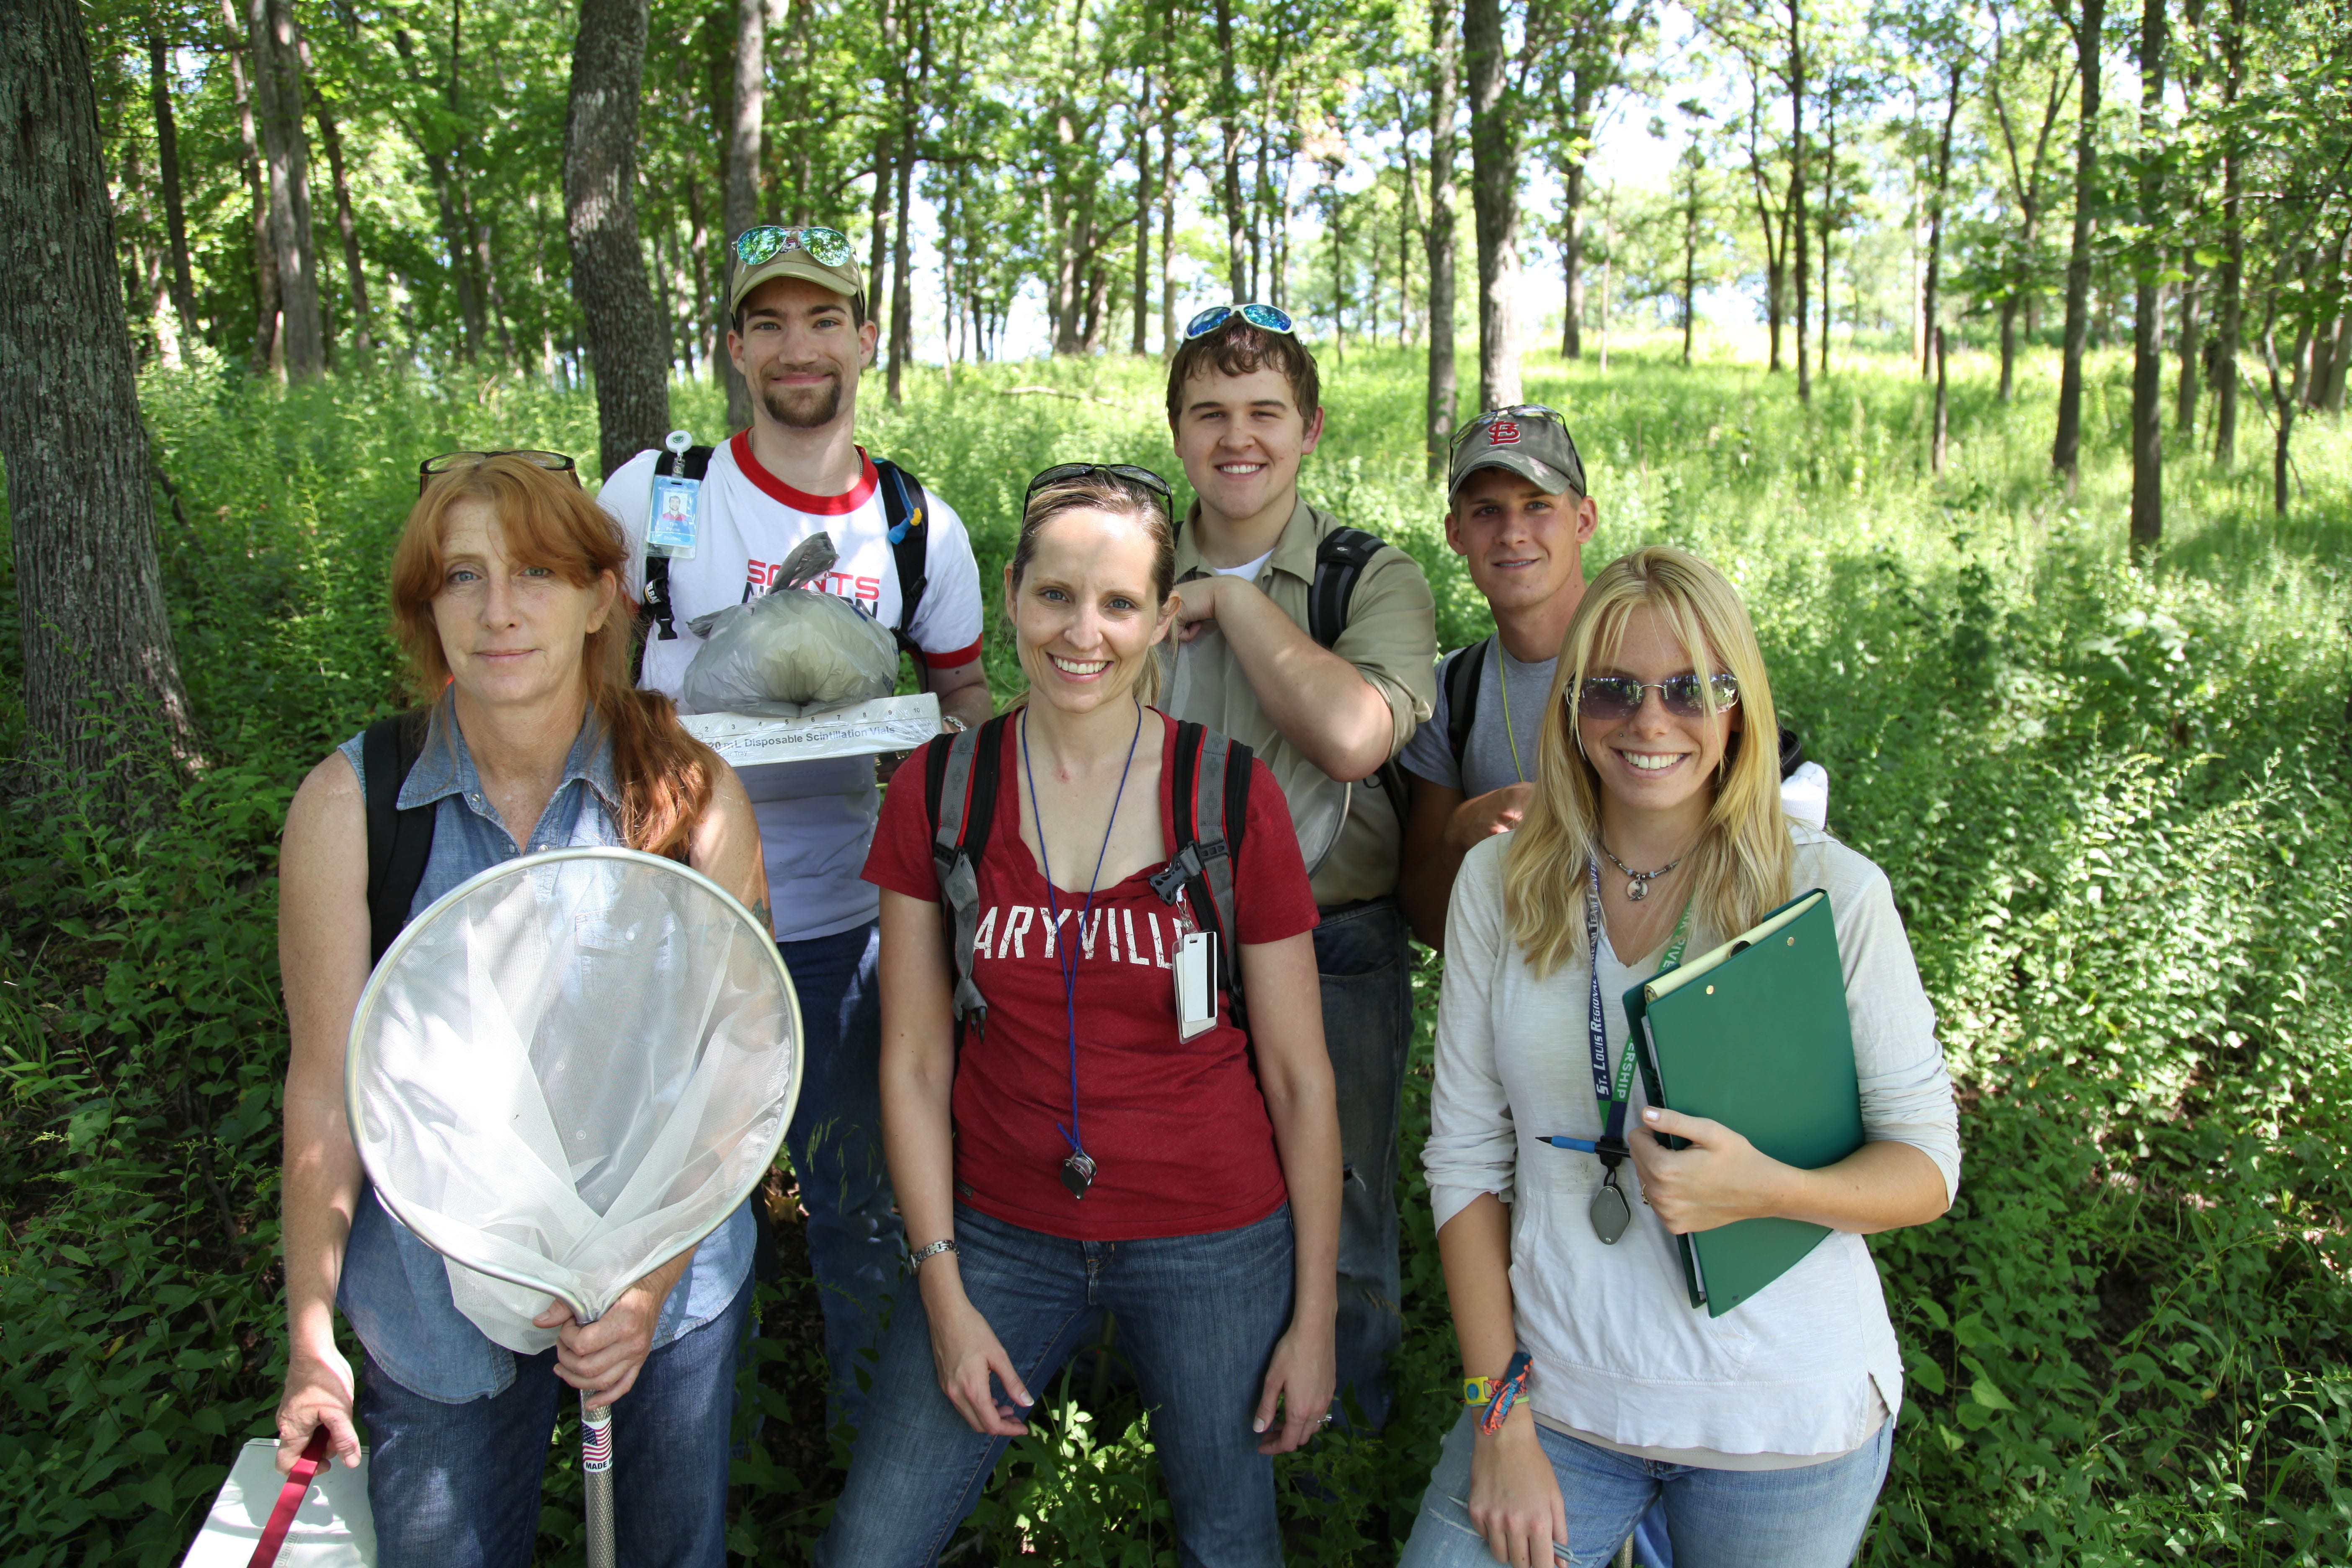 Professor Kyra Krakos outside in a field with students